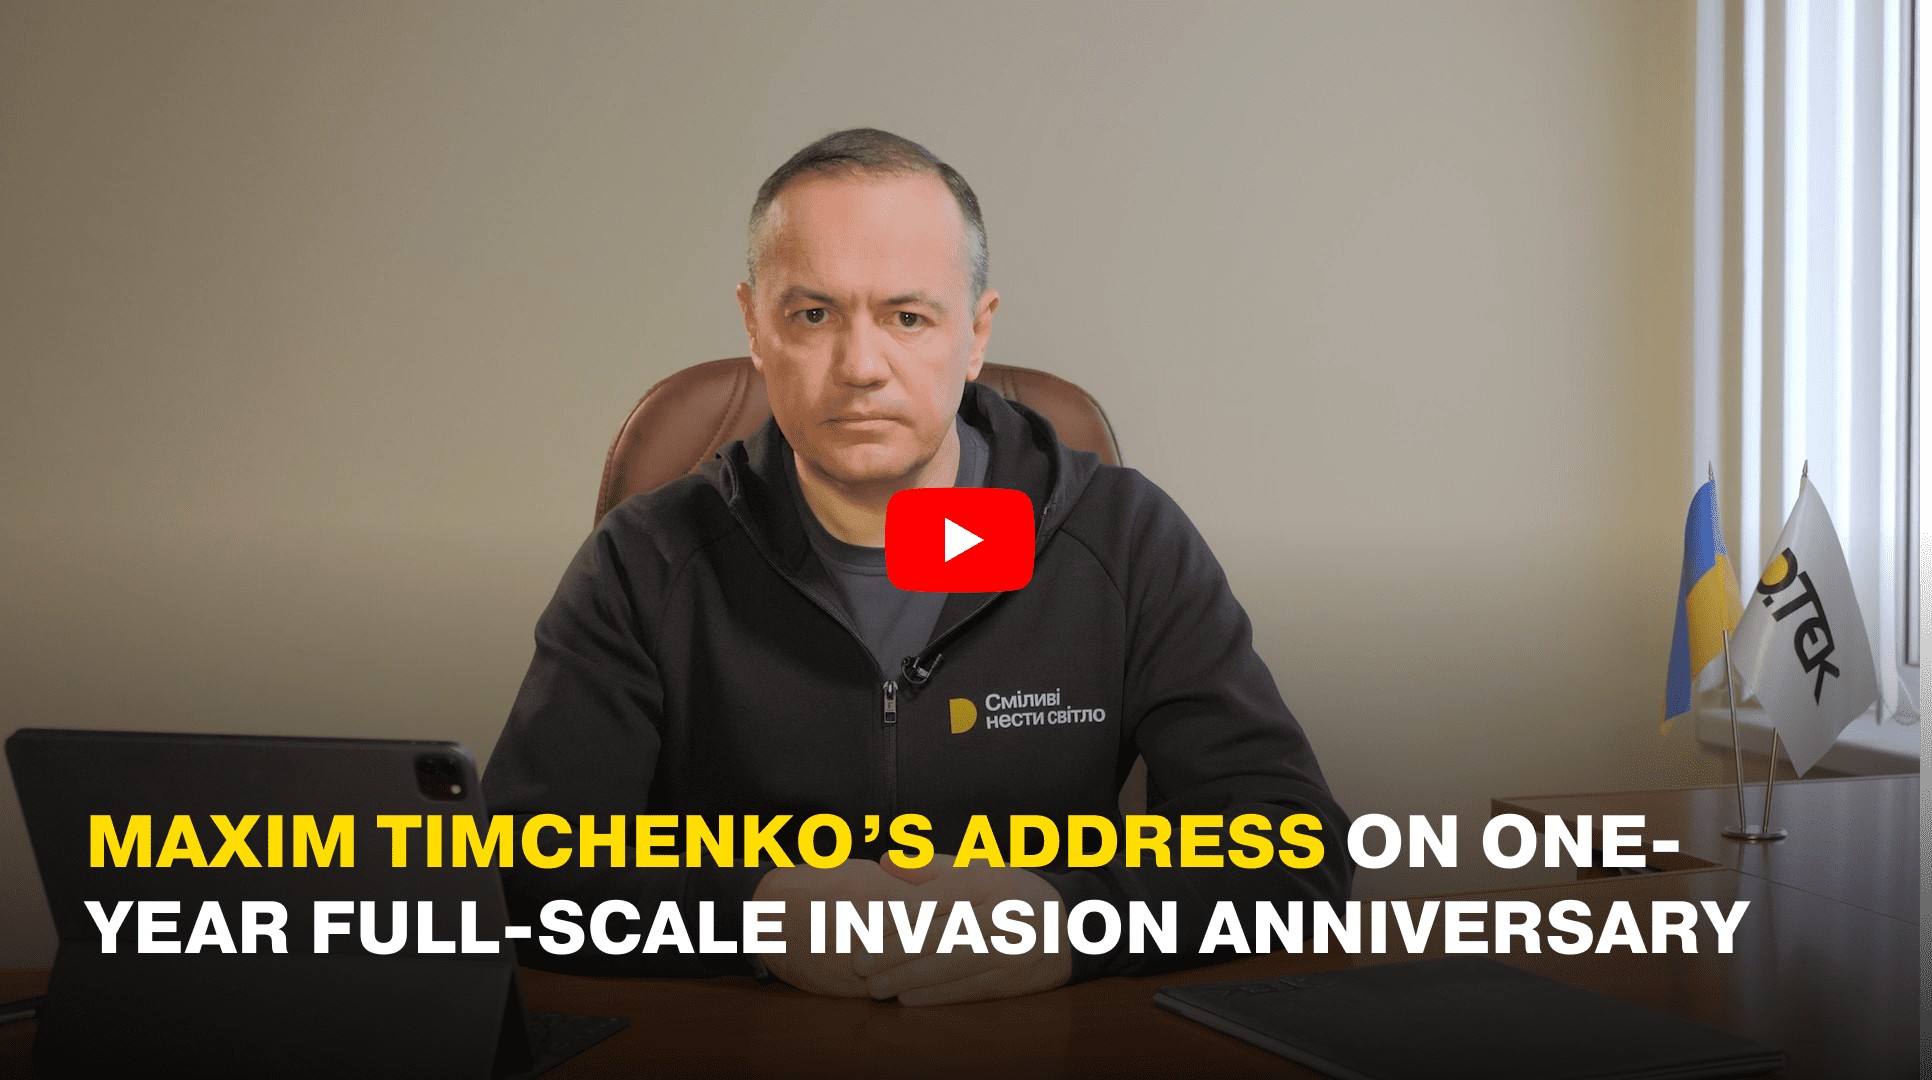 Maxim Timchenko’s address on one-year full-scale invasion anniversary